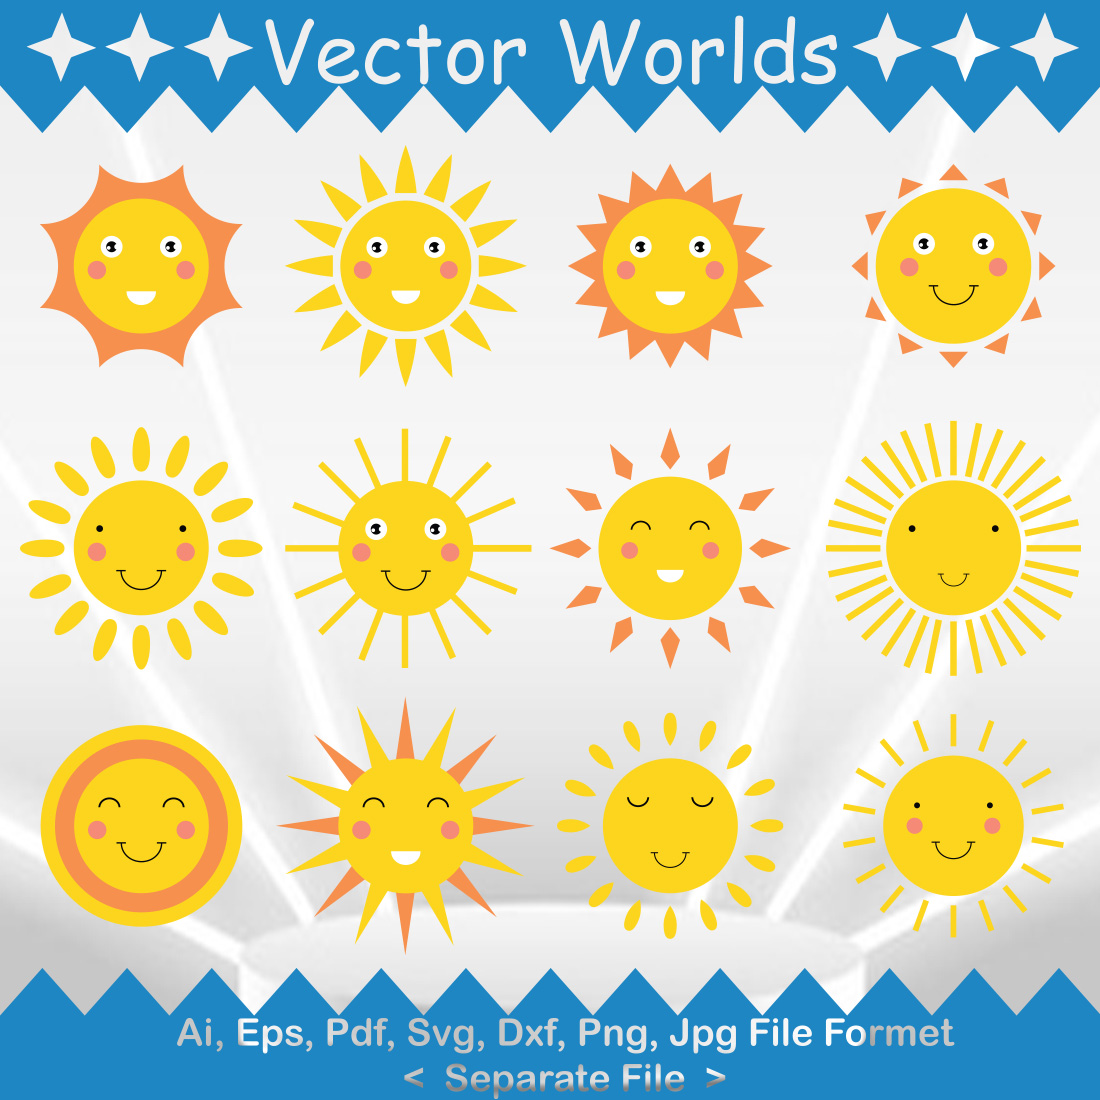 Sun SVG Vector Design cover image.